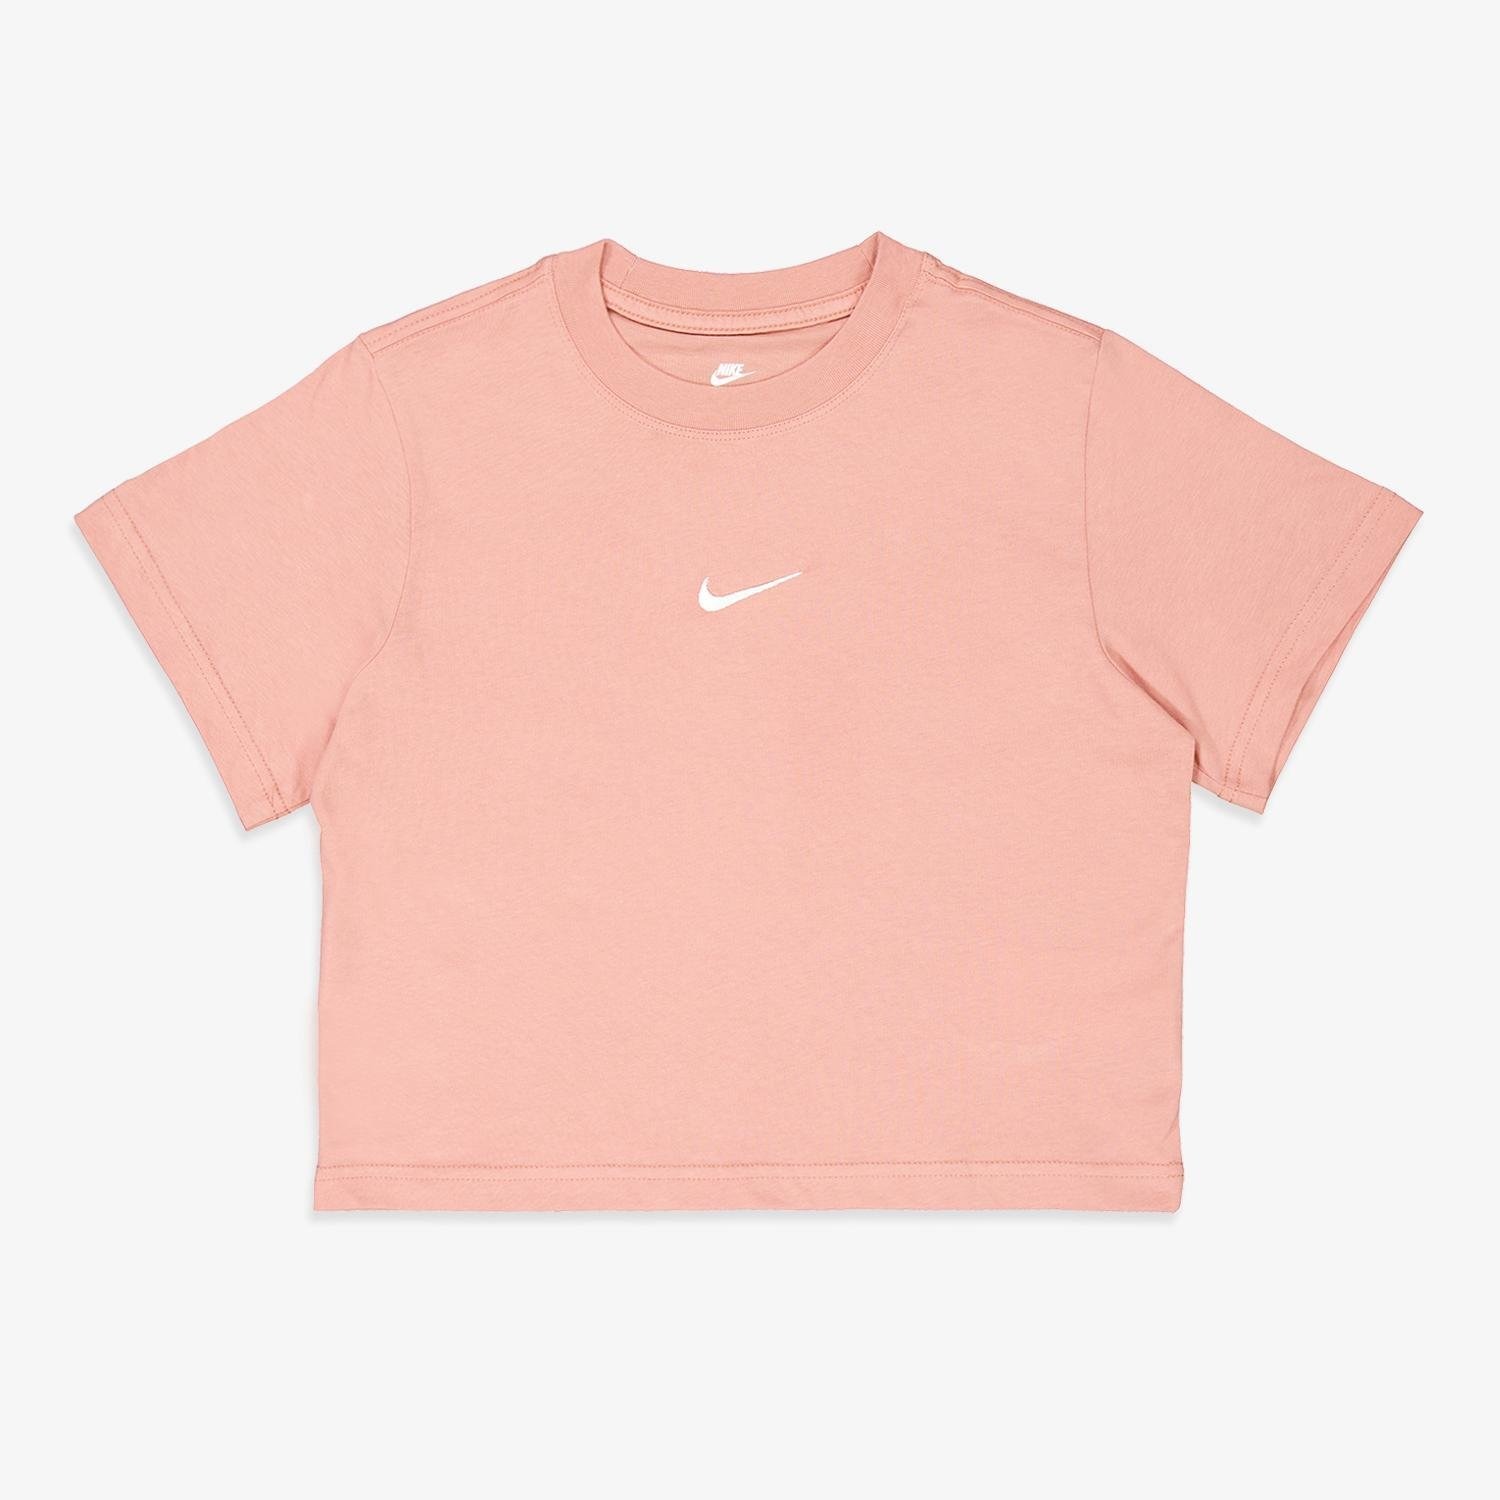 Nike Nike shirt roze kinderen kinderen